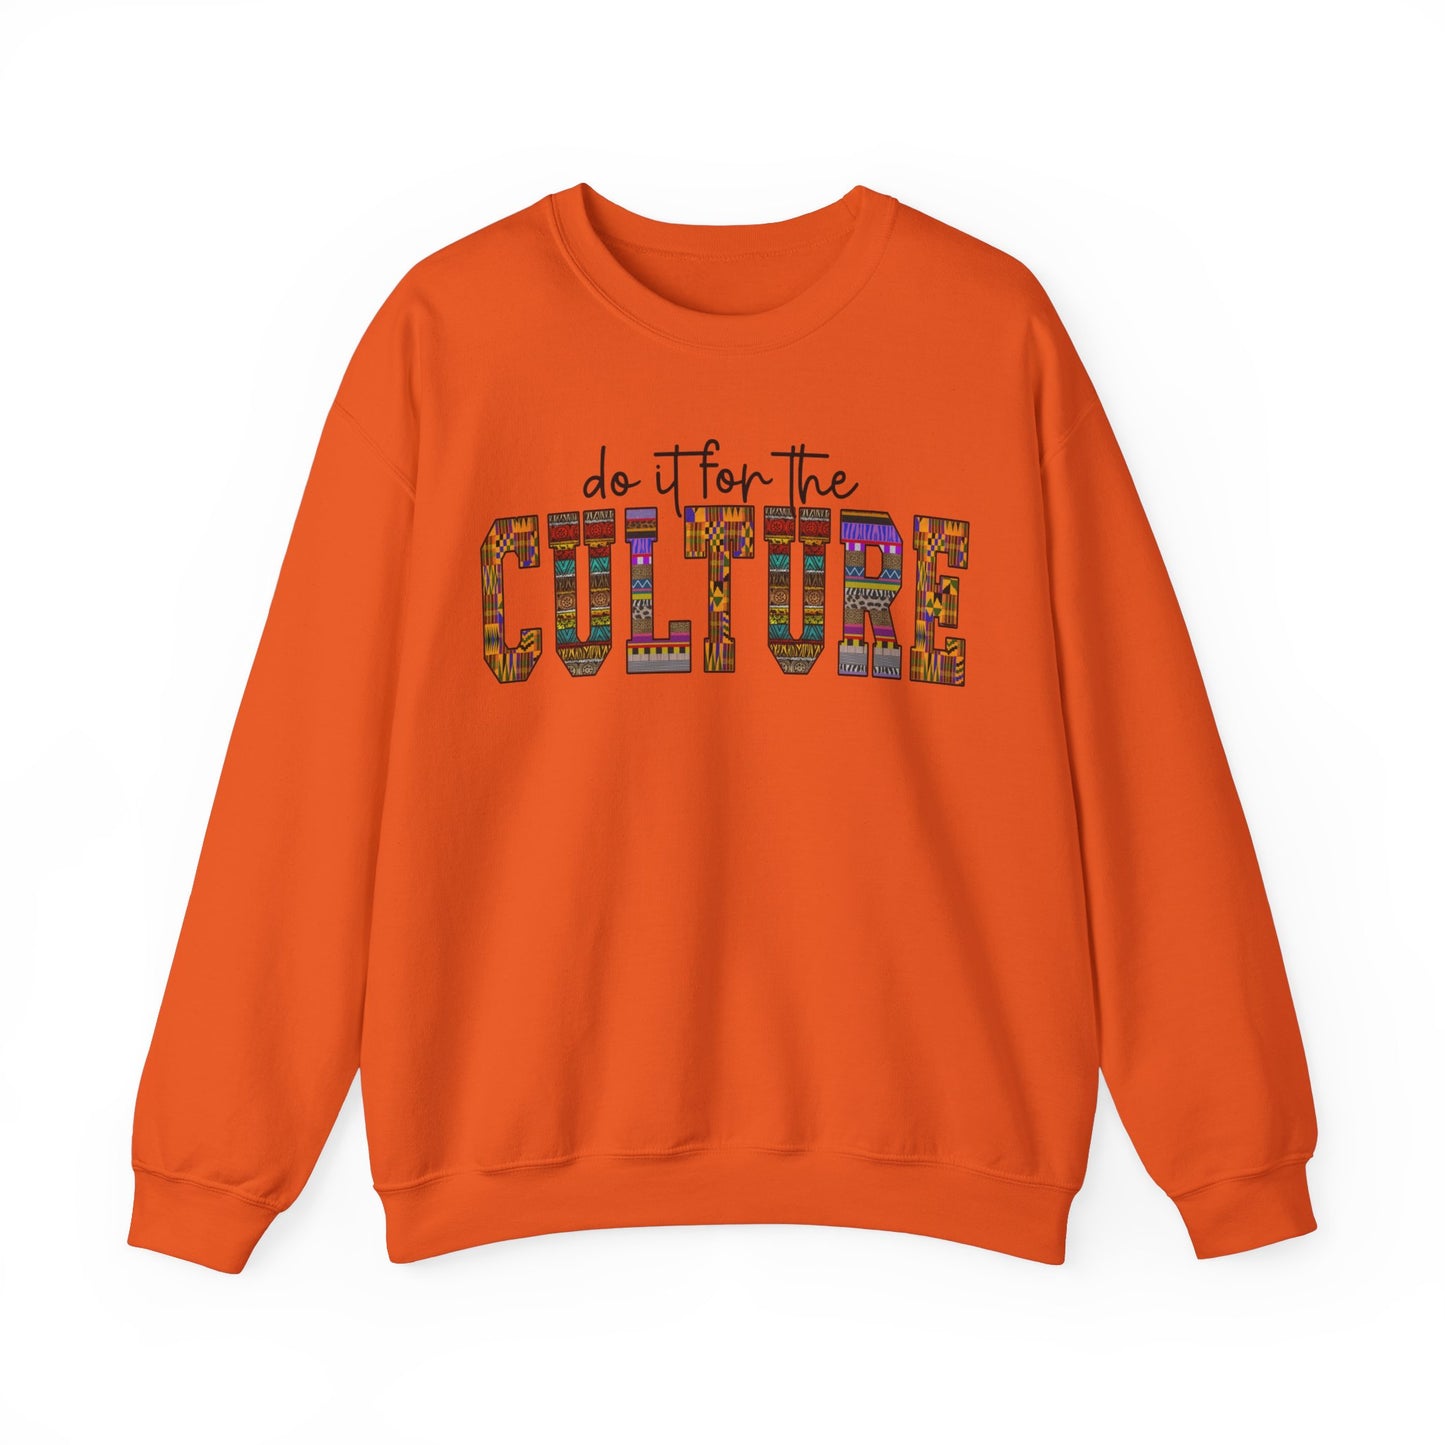 Do It For The Culture Unisex Adult Crewneck Sweatshirt